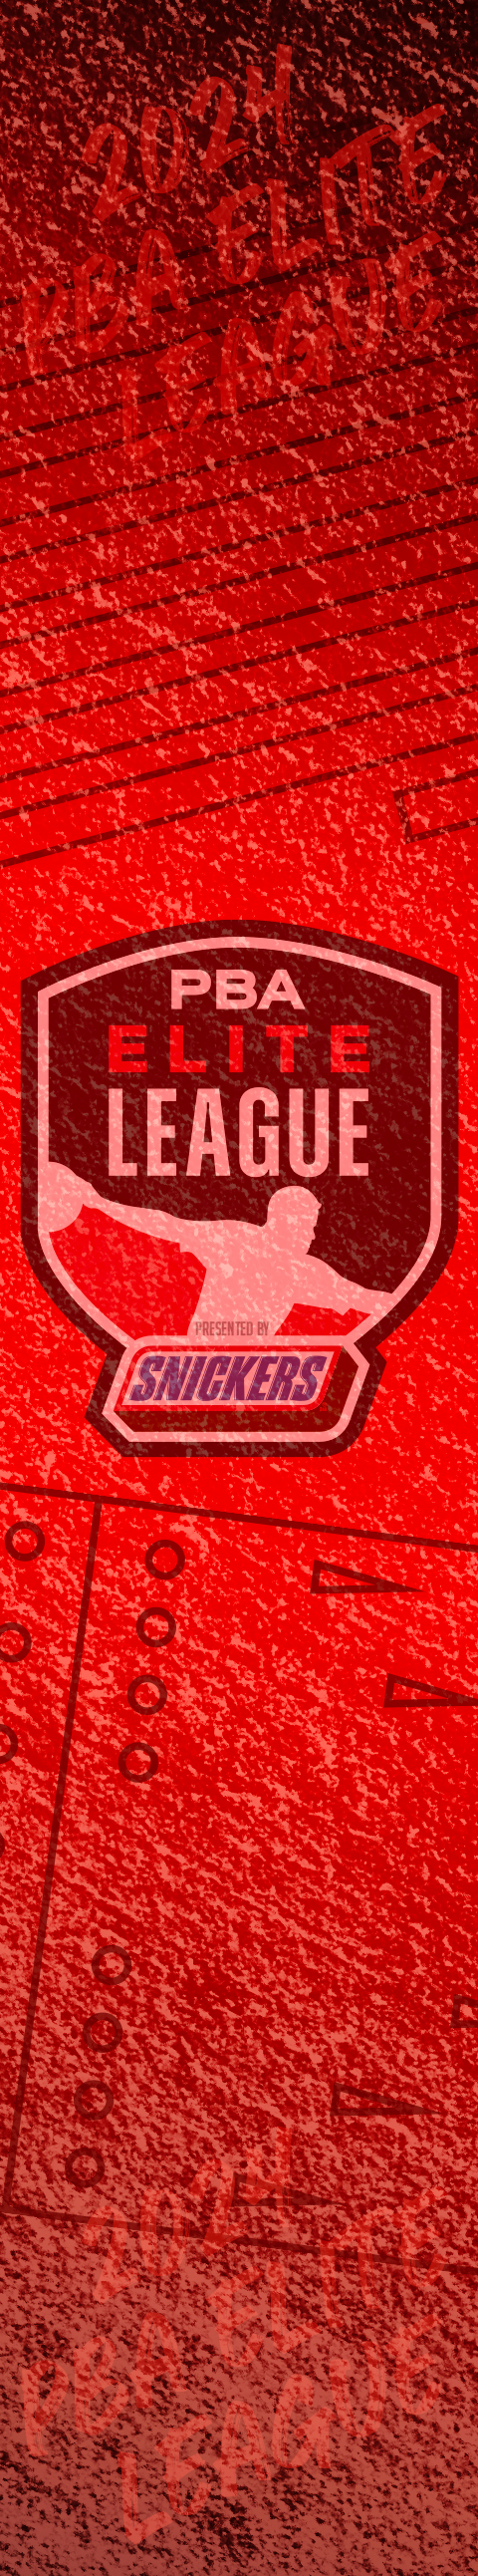 PBA-Elite-League-Main-Page-Sidebar Images-480x2585-Left.jpg